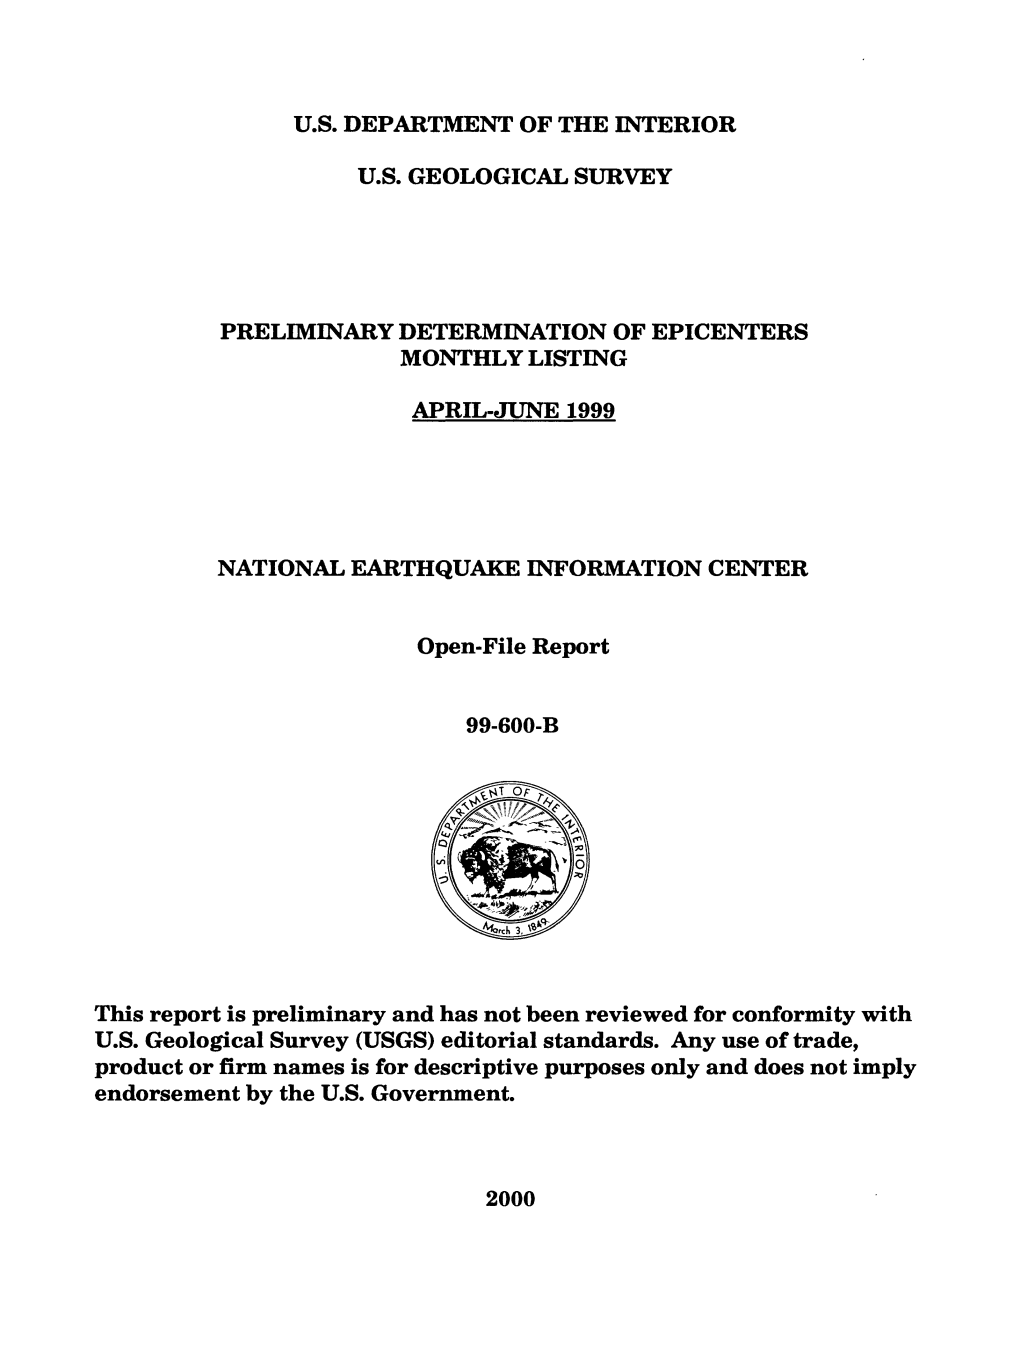 U.S. Department of the Interior U.S. Geological